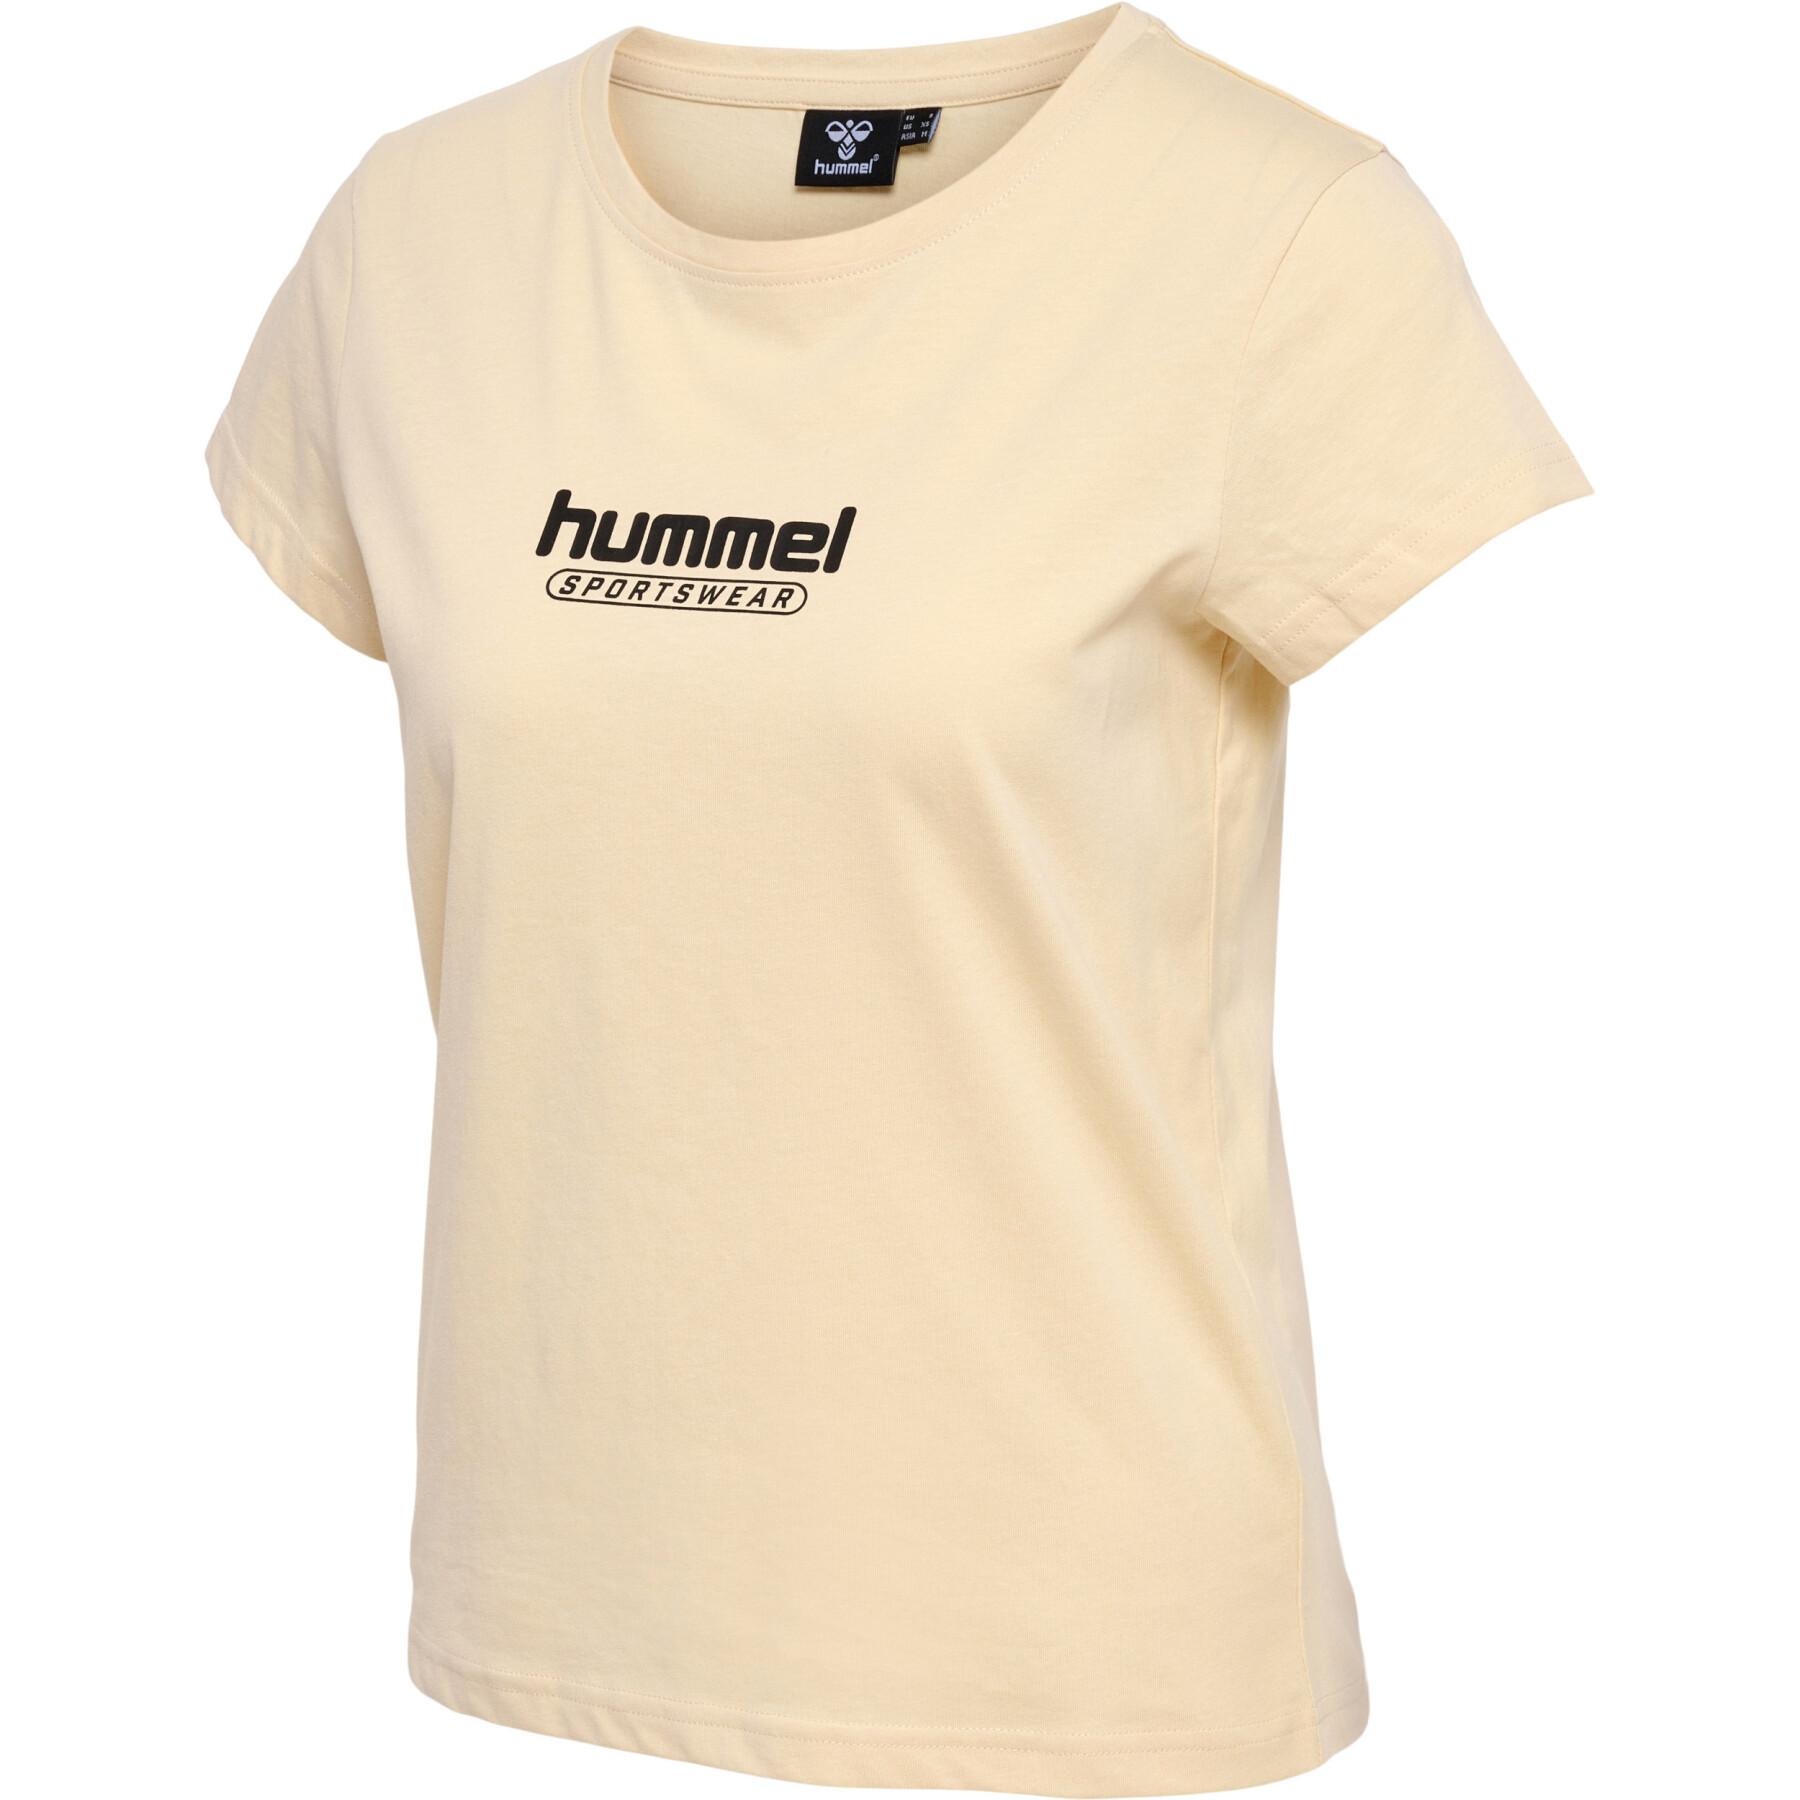 Camiseta de mujer Hummel Booster